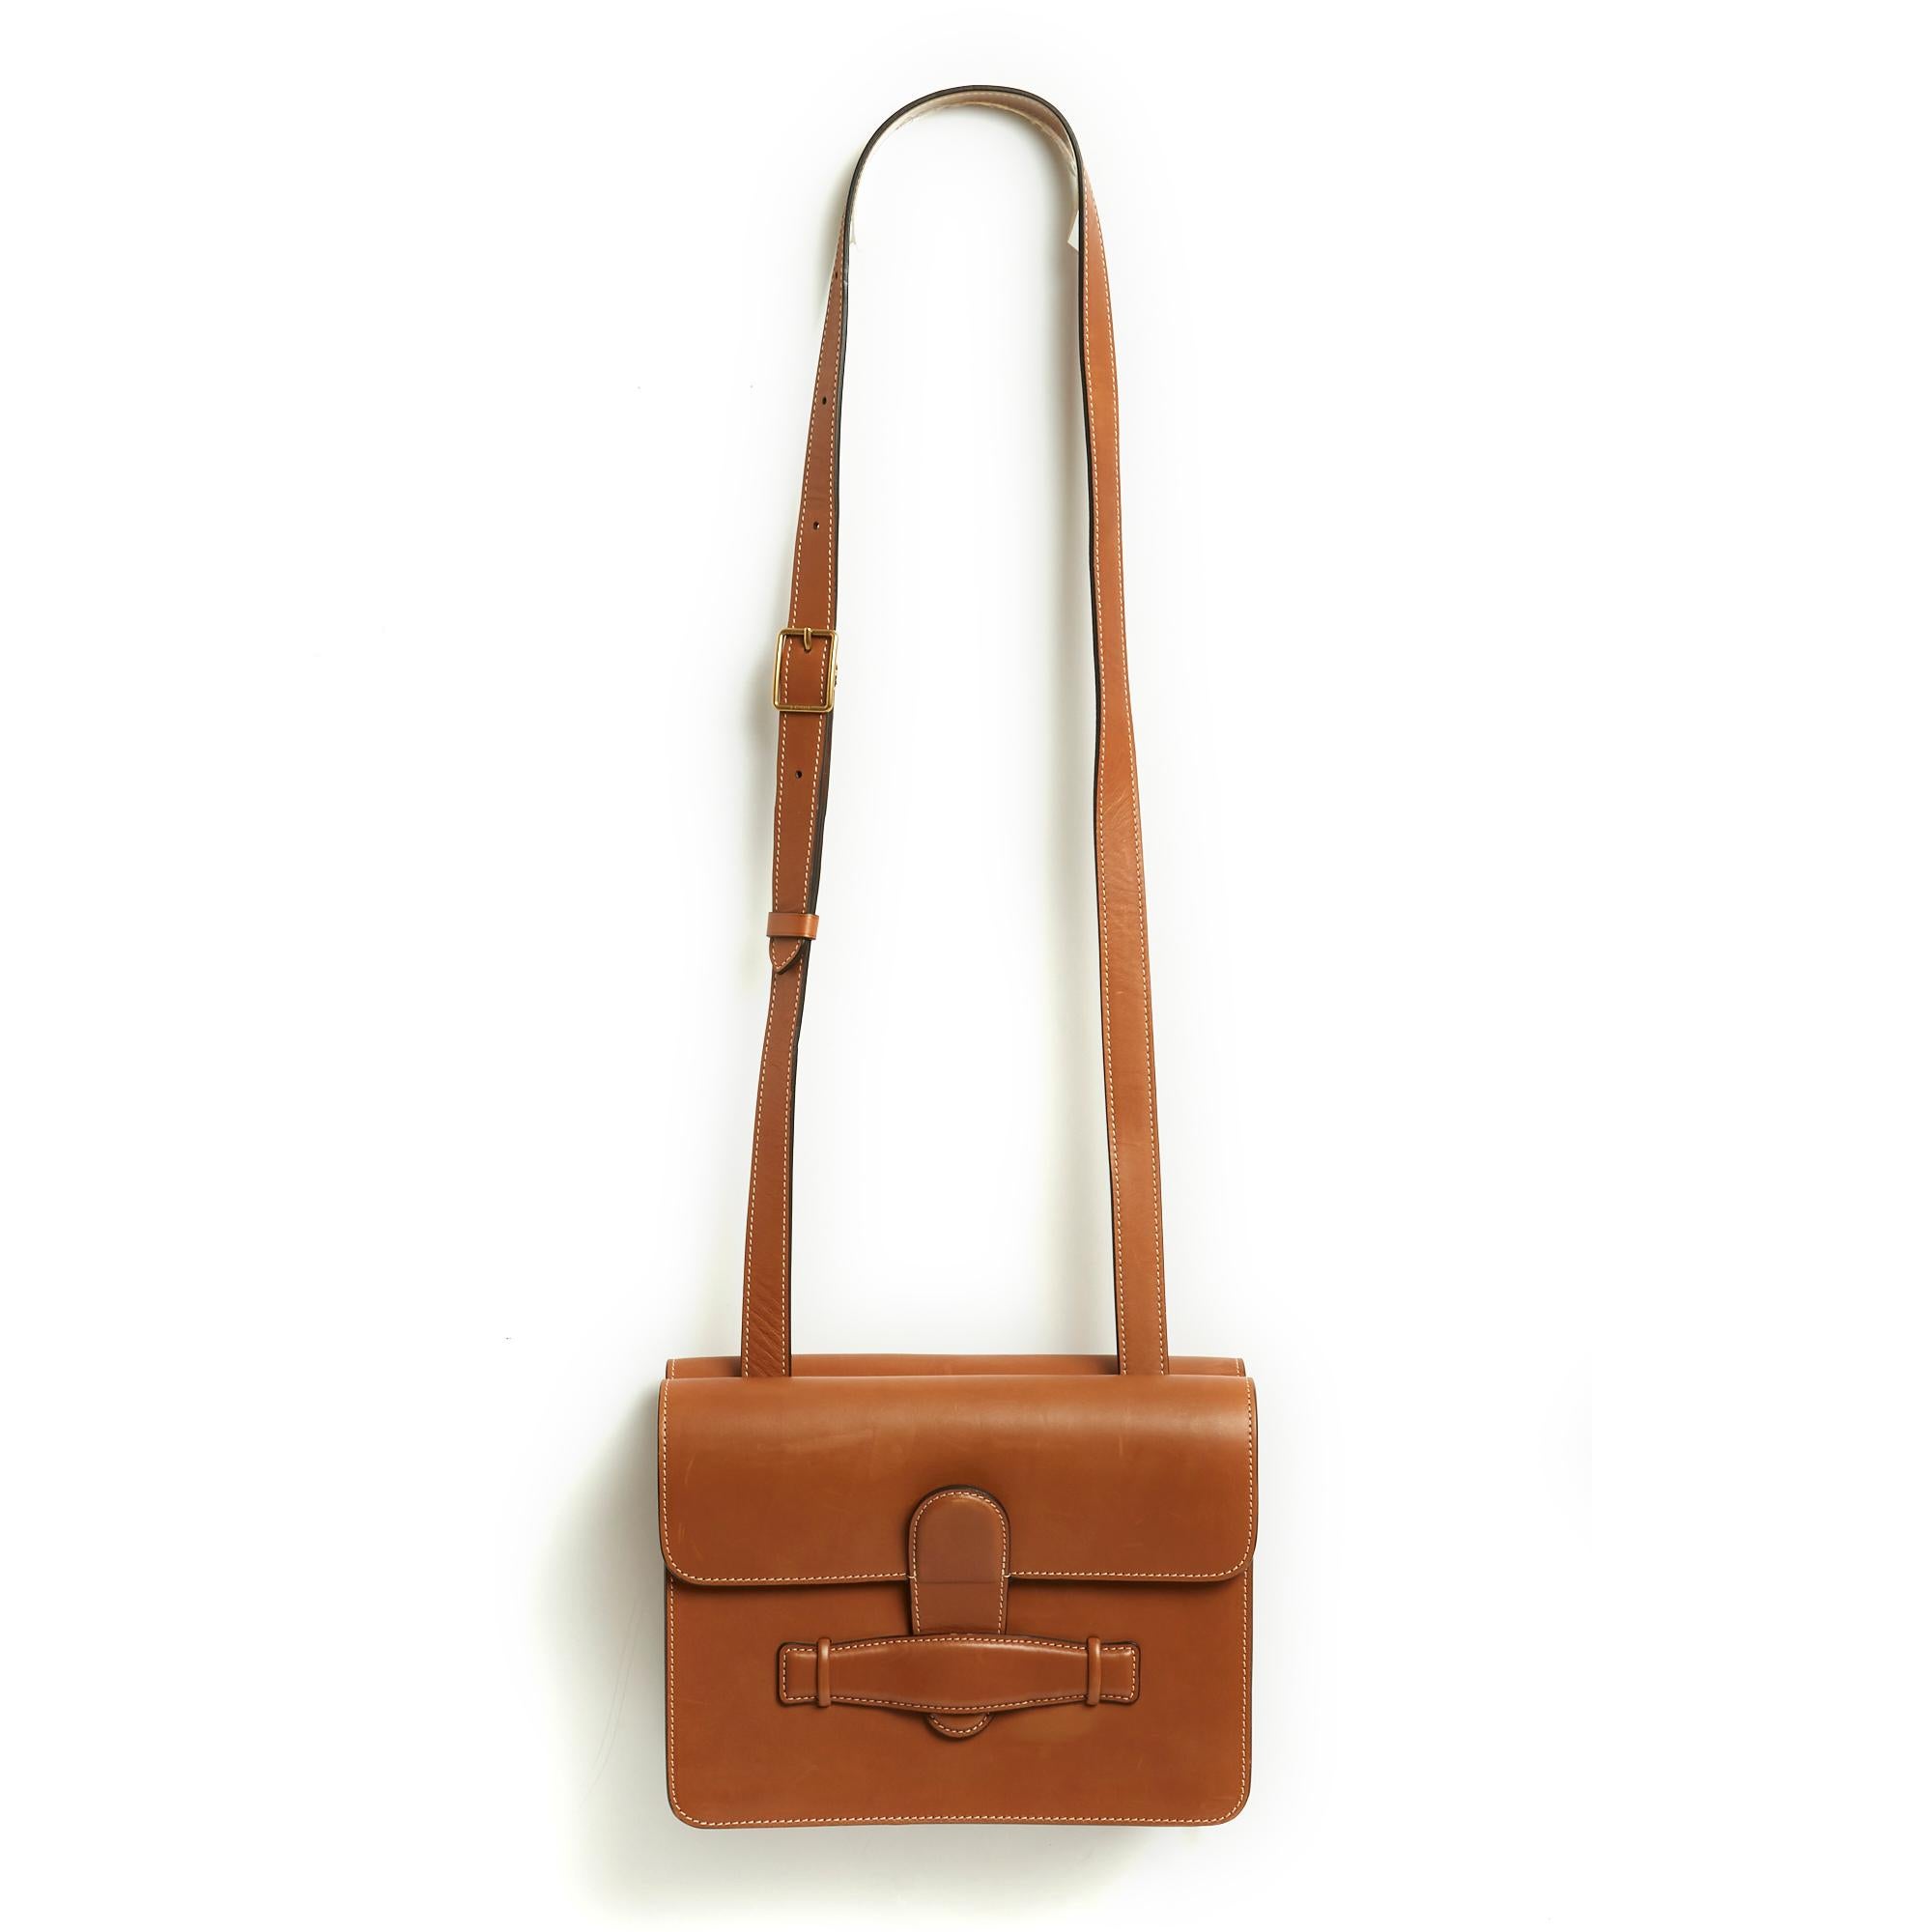 2018 Phoebe Philo Celine Symmetrical Bag natural leather For Sale 1